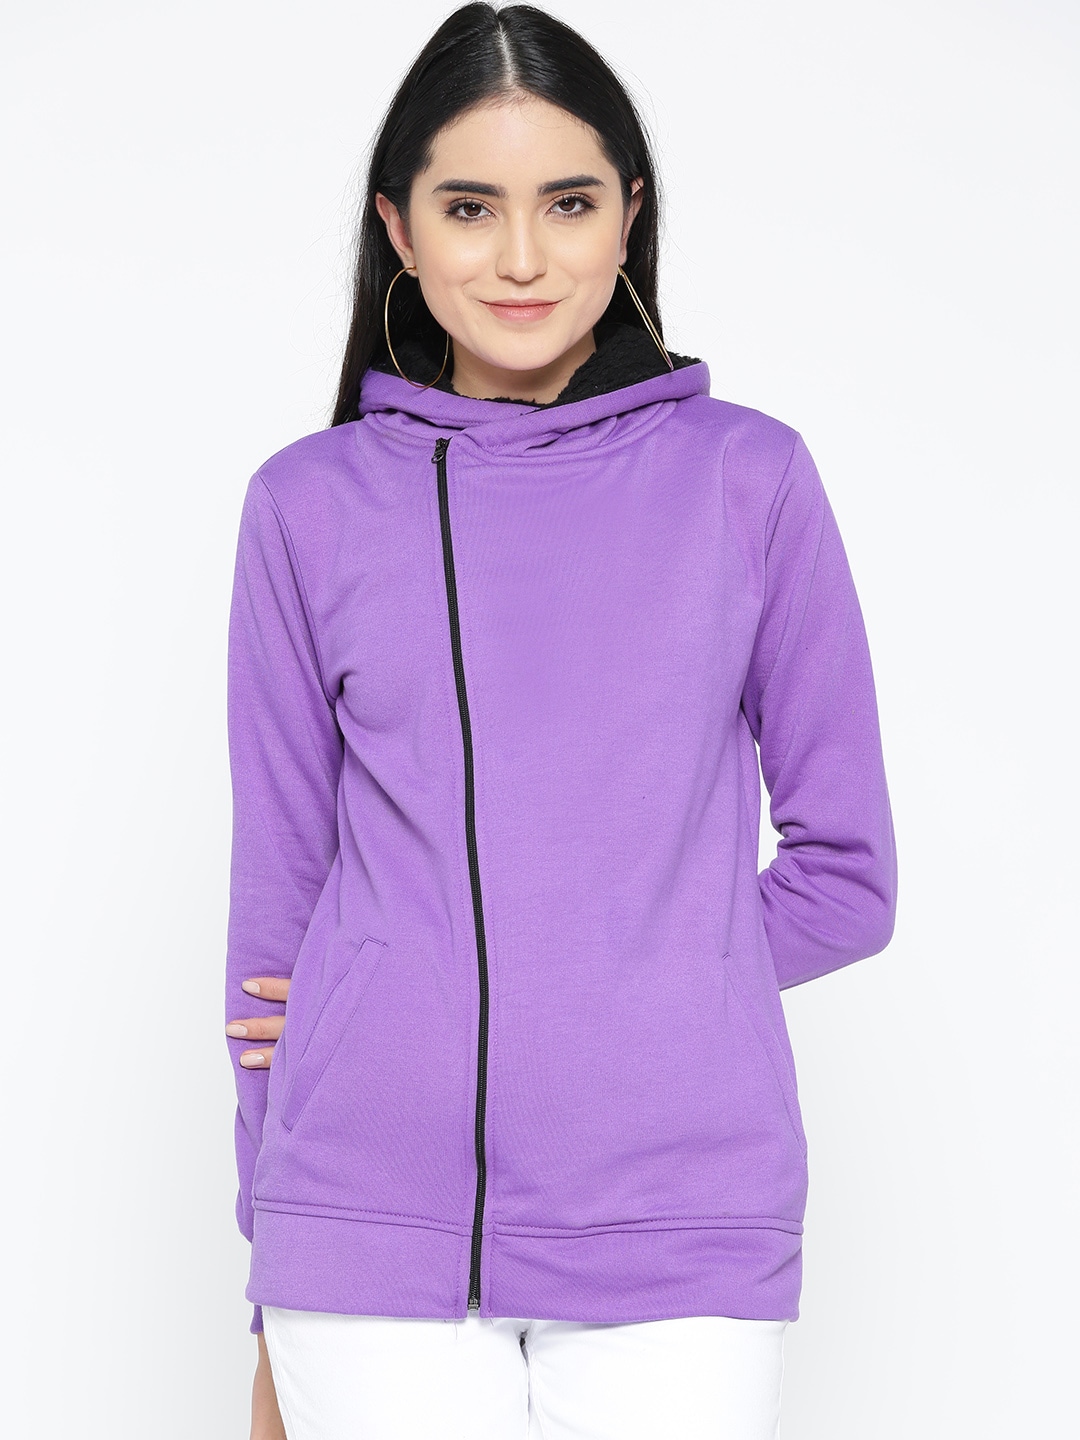 Belle Fille Women Purple Lightweight Solid Hooded Sweatshirt Price in India